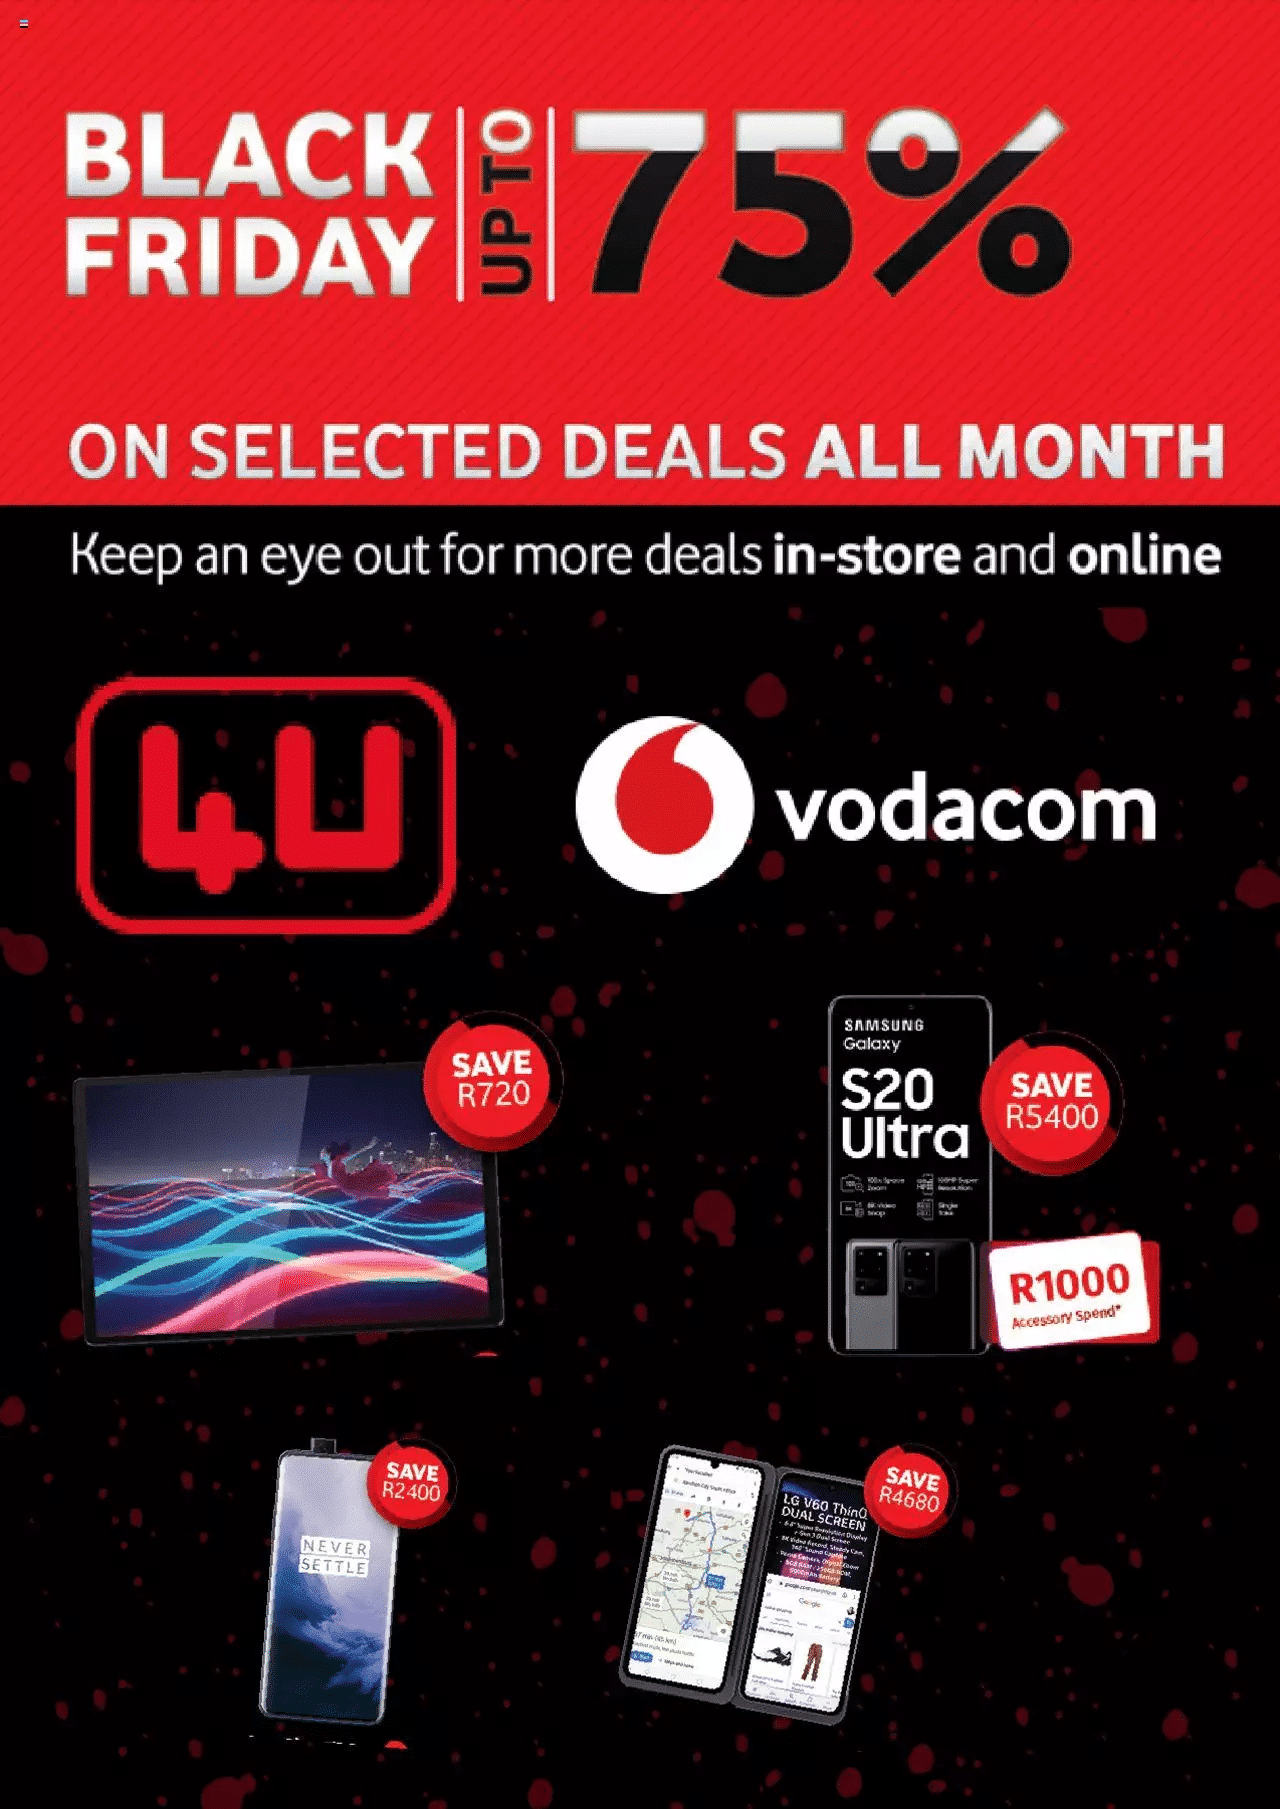 Vodacom Black Friday Deals & Specials 2021 - When To Black Friday 2021 Deals Start